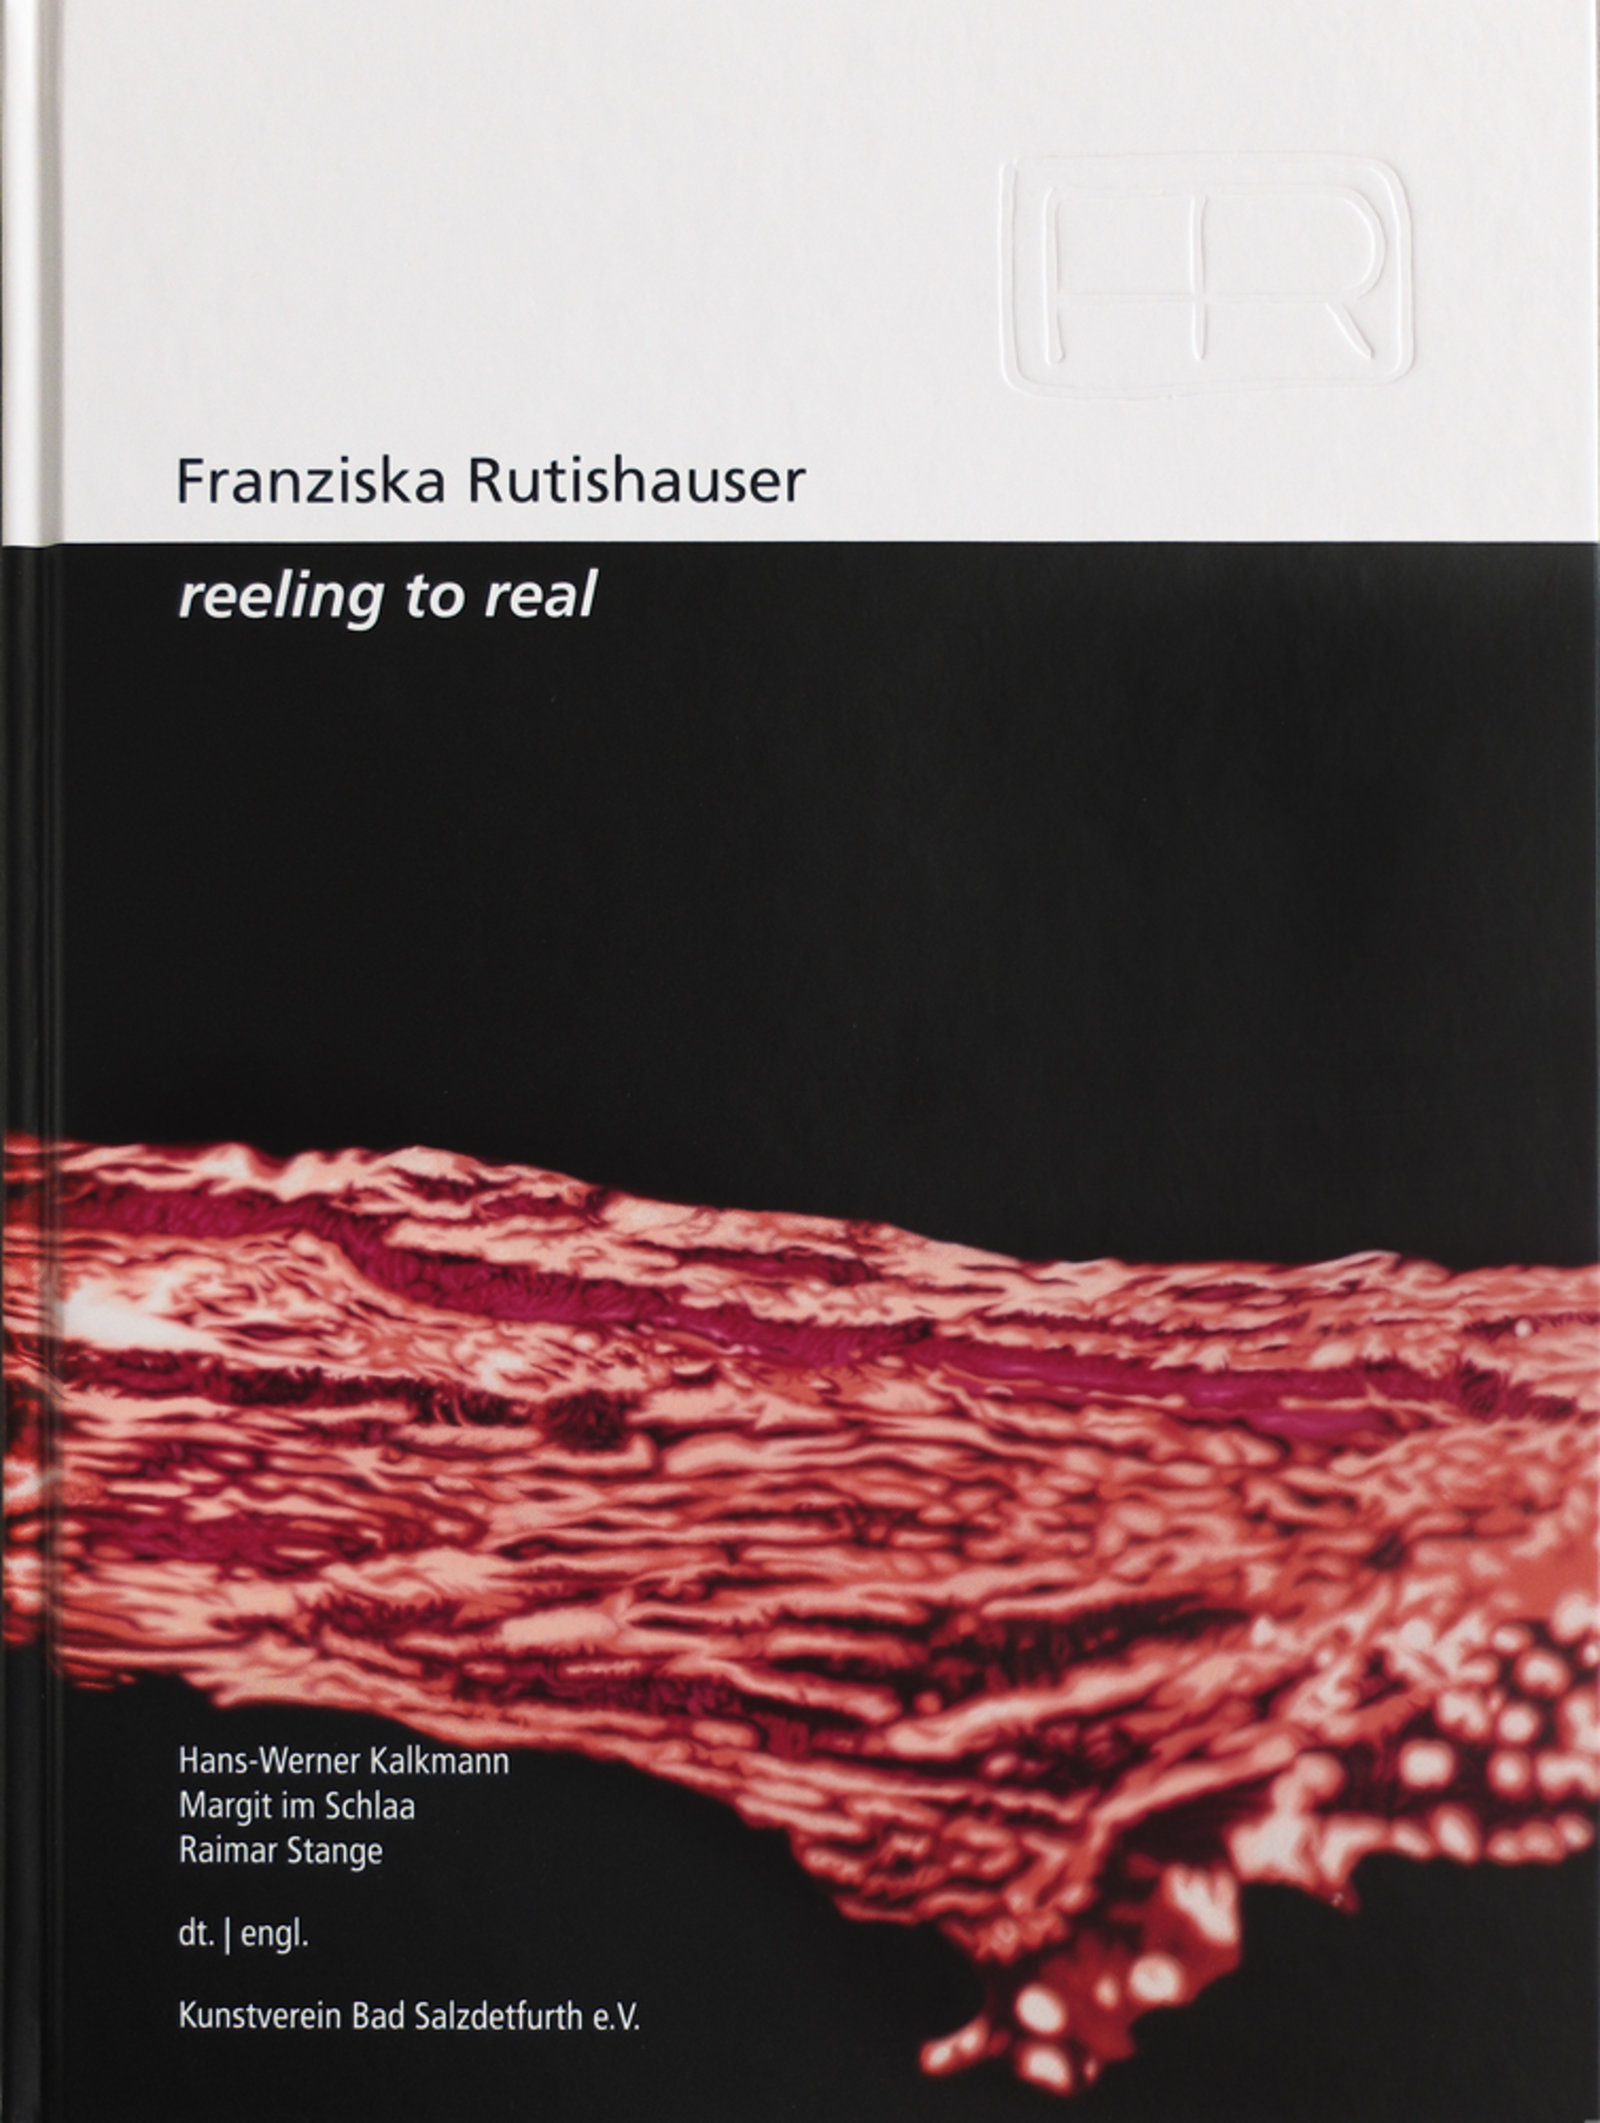 Exhibition catalogue, Publication: Franziska Rutishauser | reeling to real, 2016